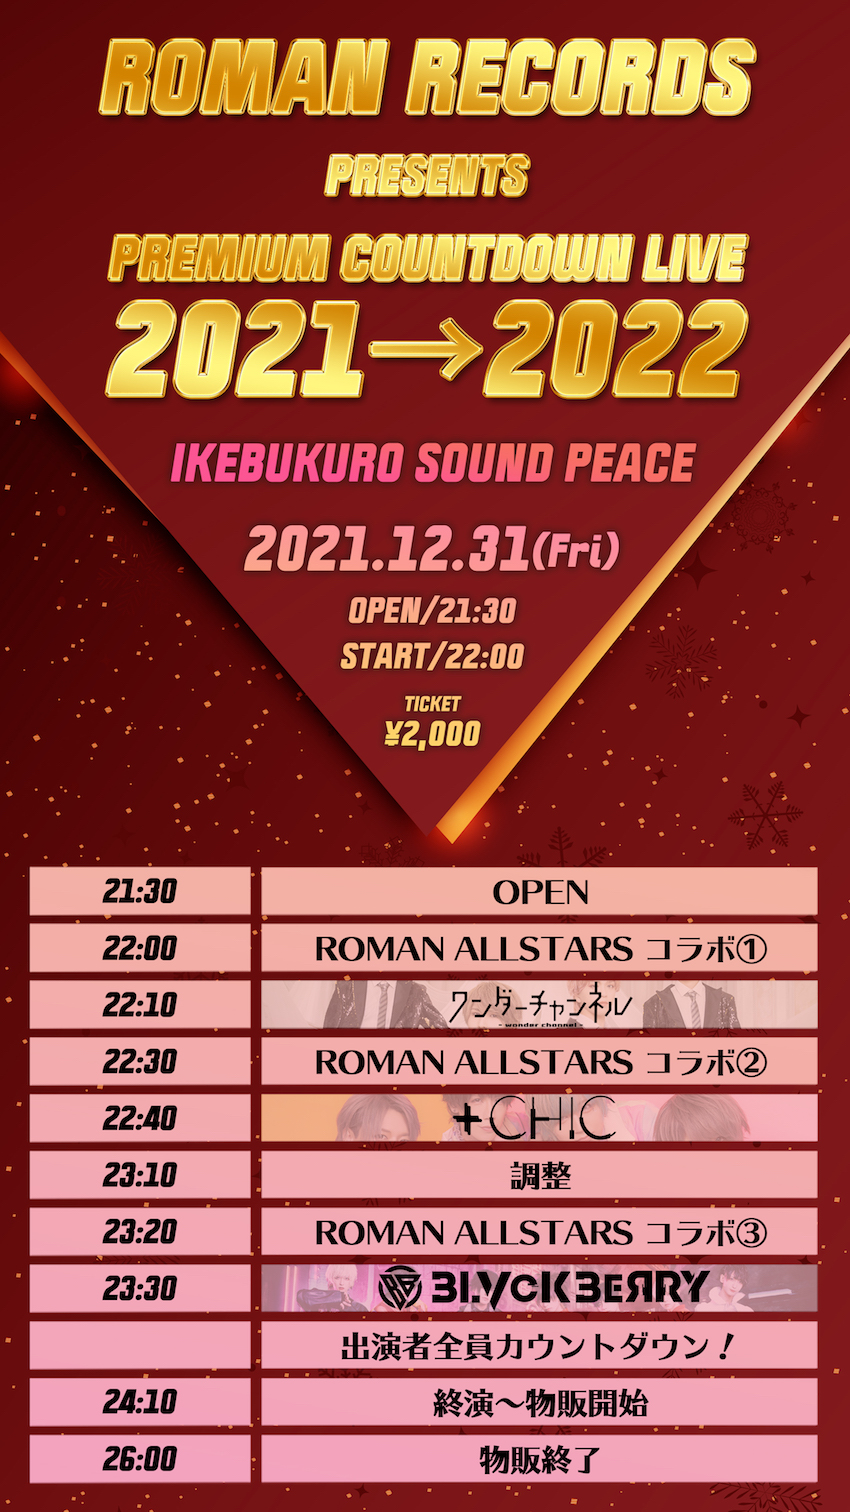 ROMAN RECORDS PRESENTS「PREMIUM COUNTDOWN LIVE 2021→2022」